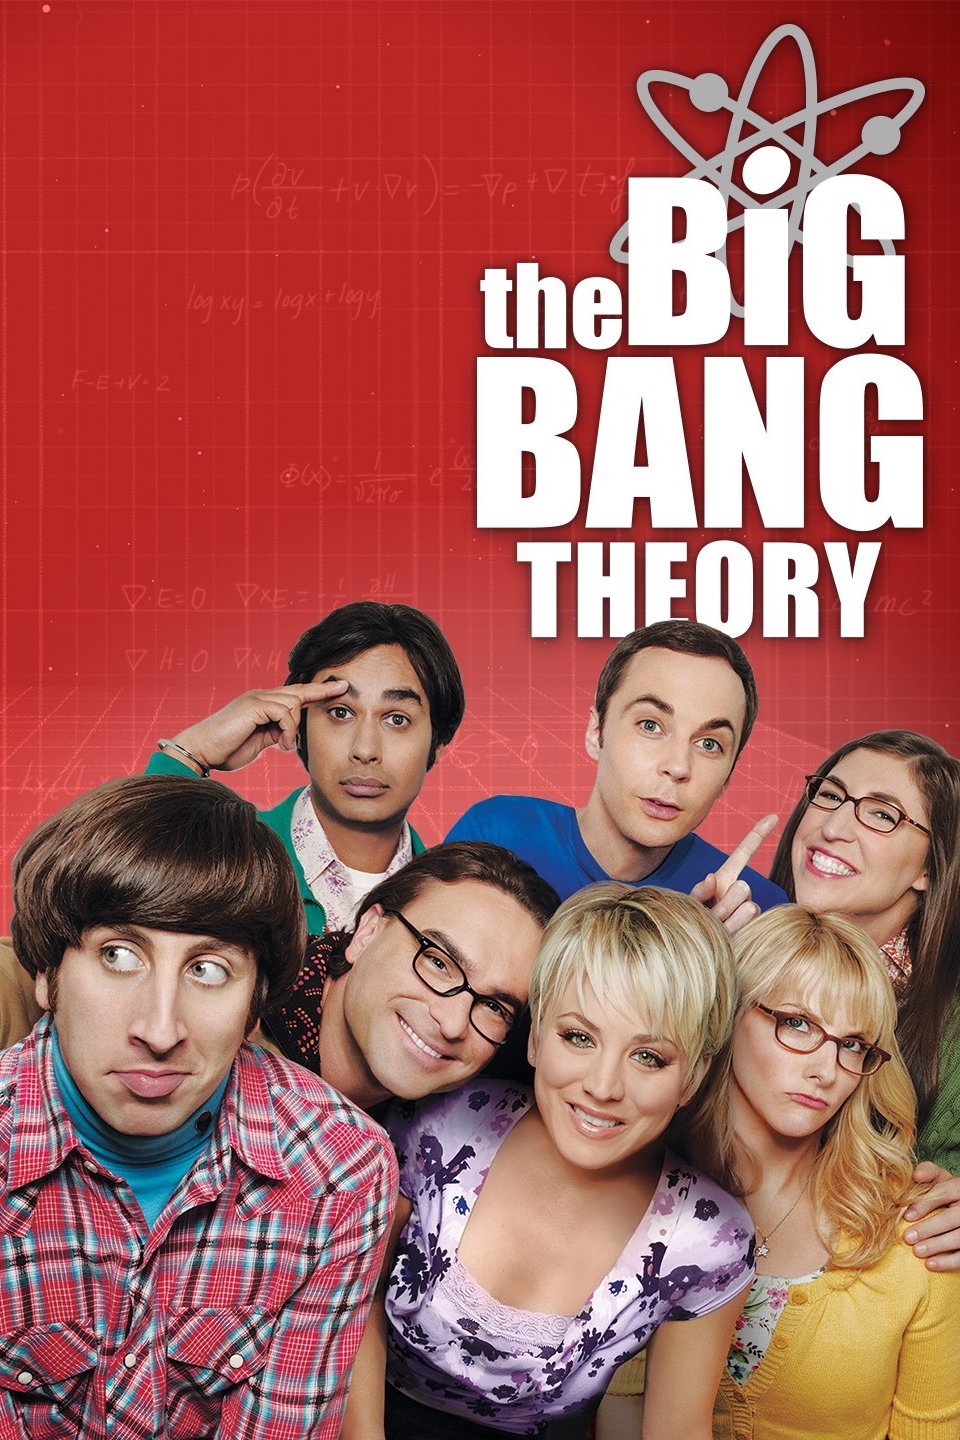 The Big bang Theroy